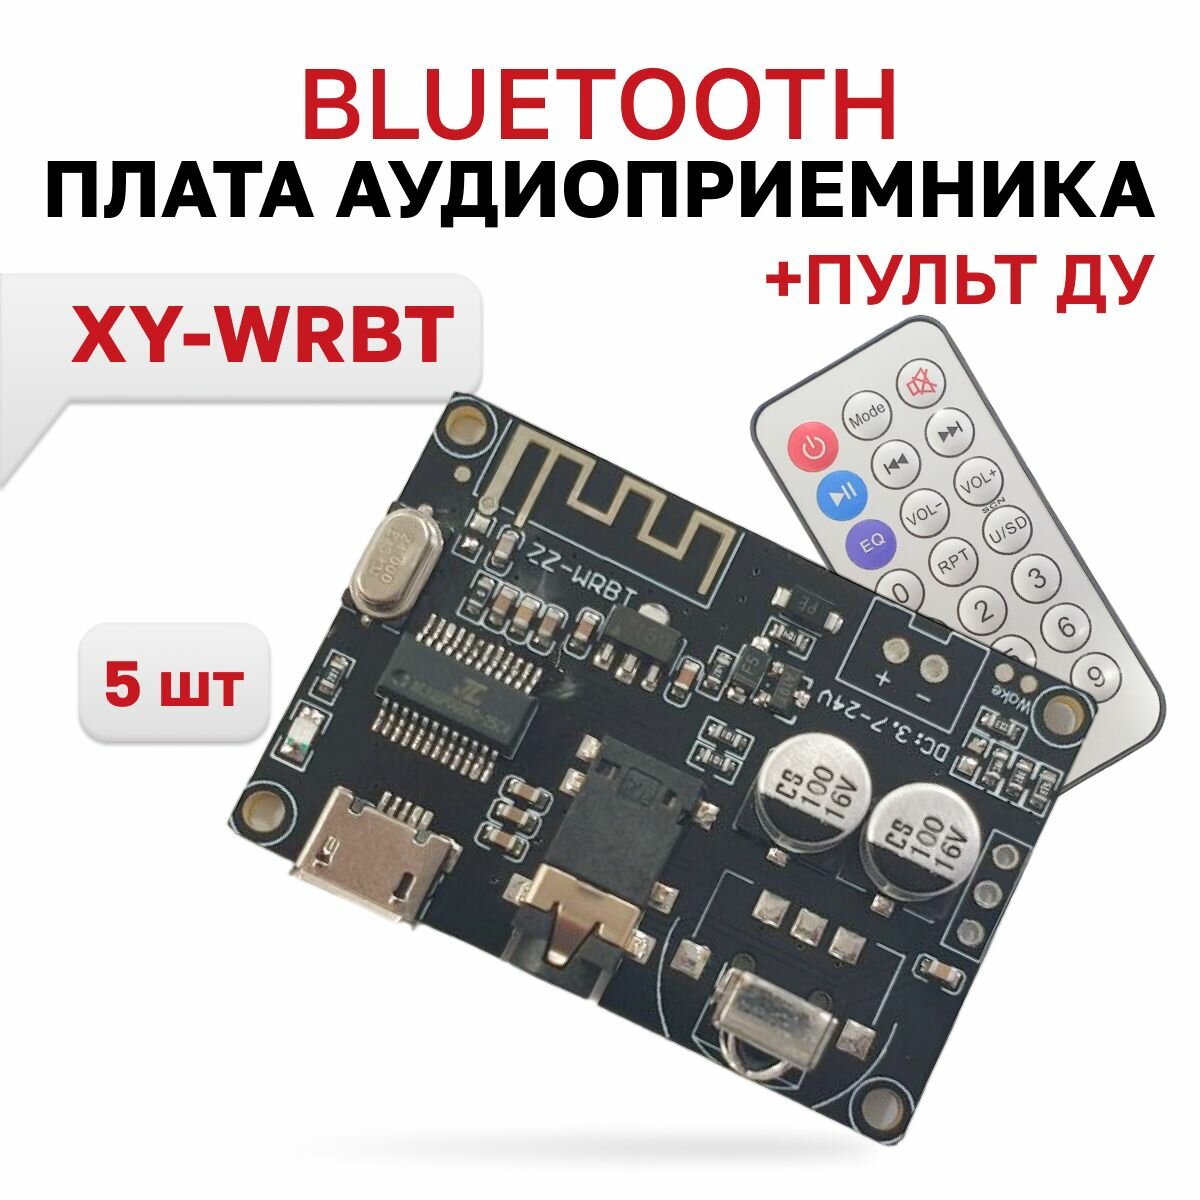 Модуль MP3 Bluetooth (XY-WRBT) Bluetooth приемник декодер плата пульт ду 5 шт.